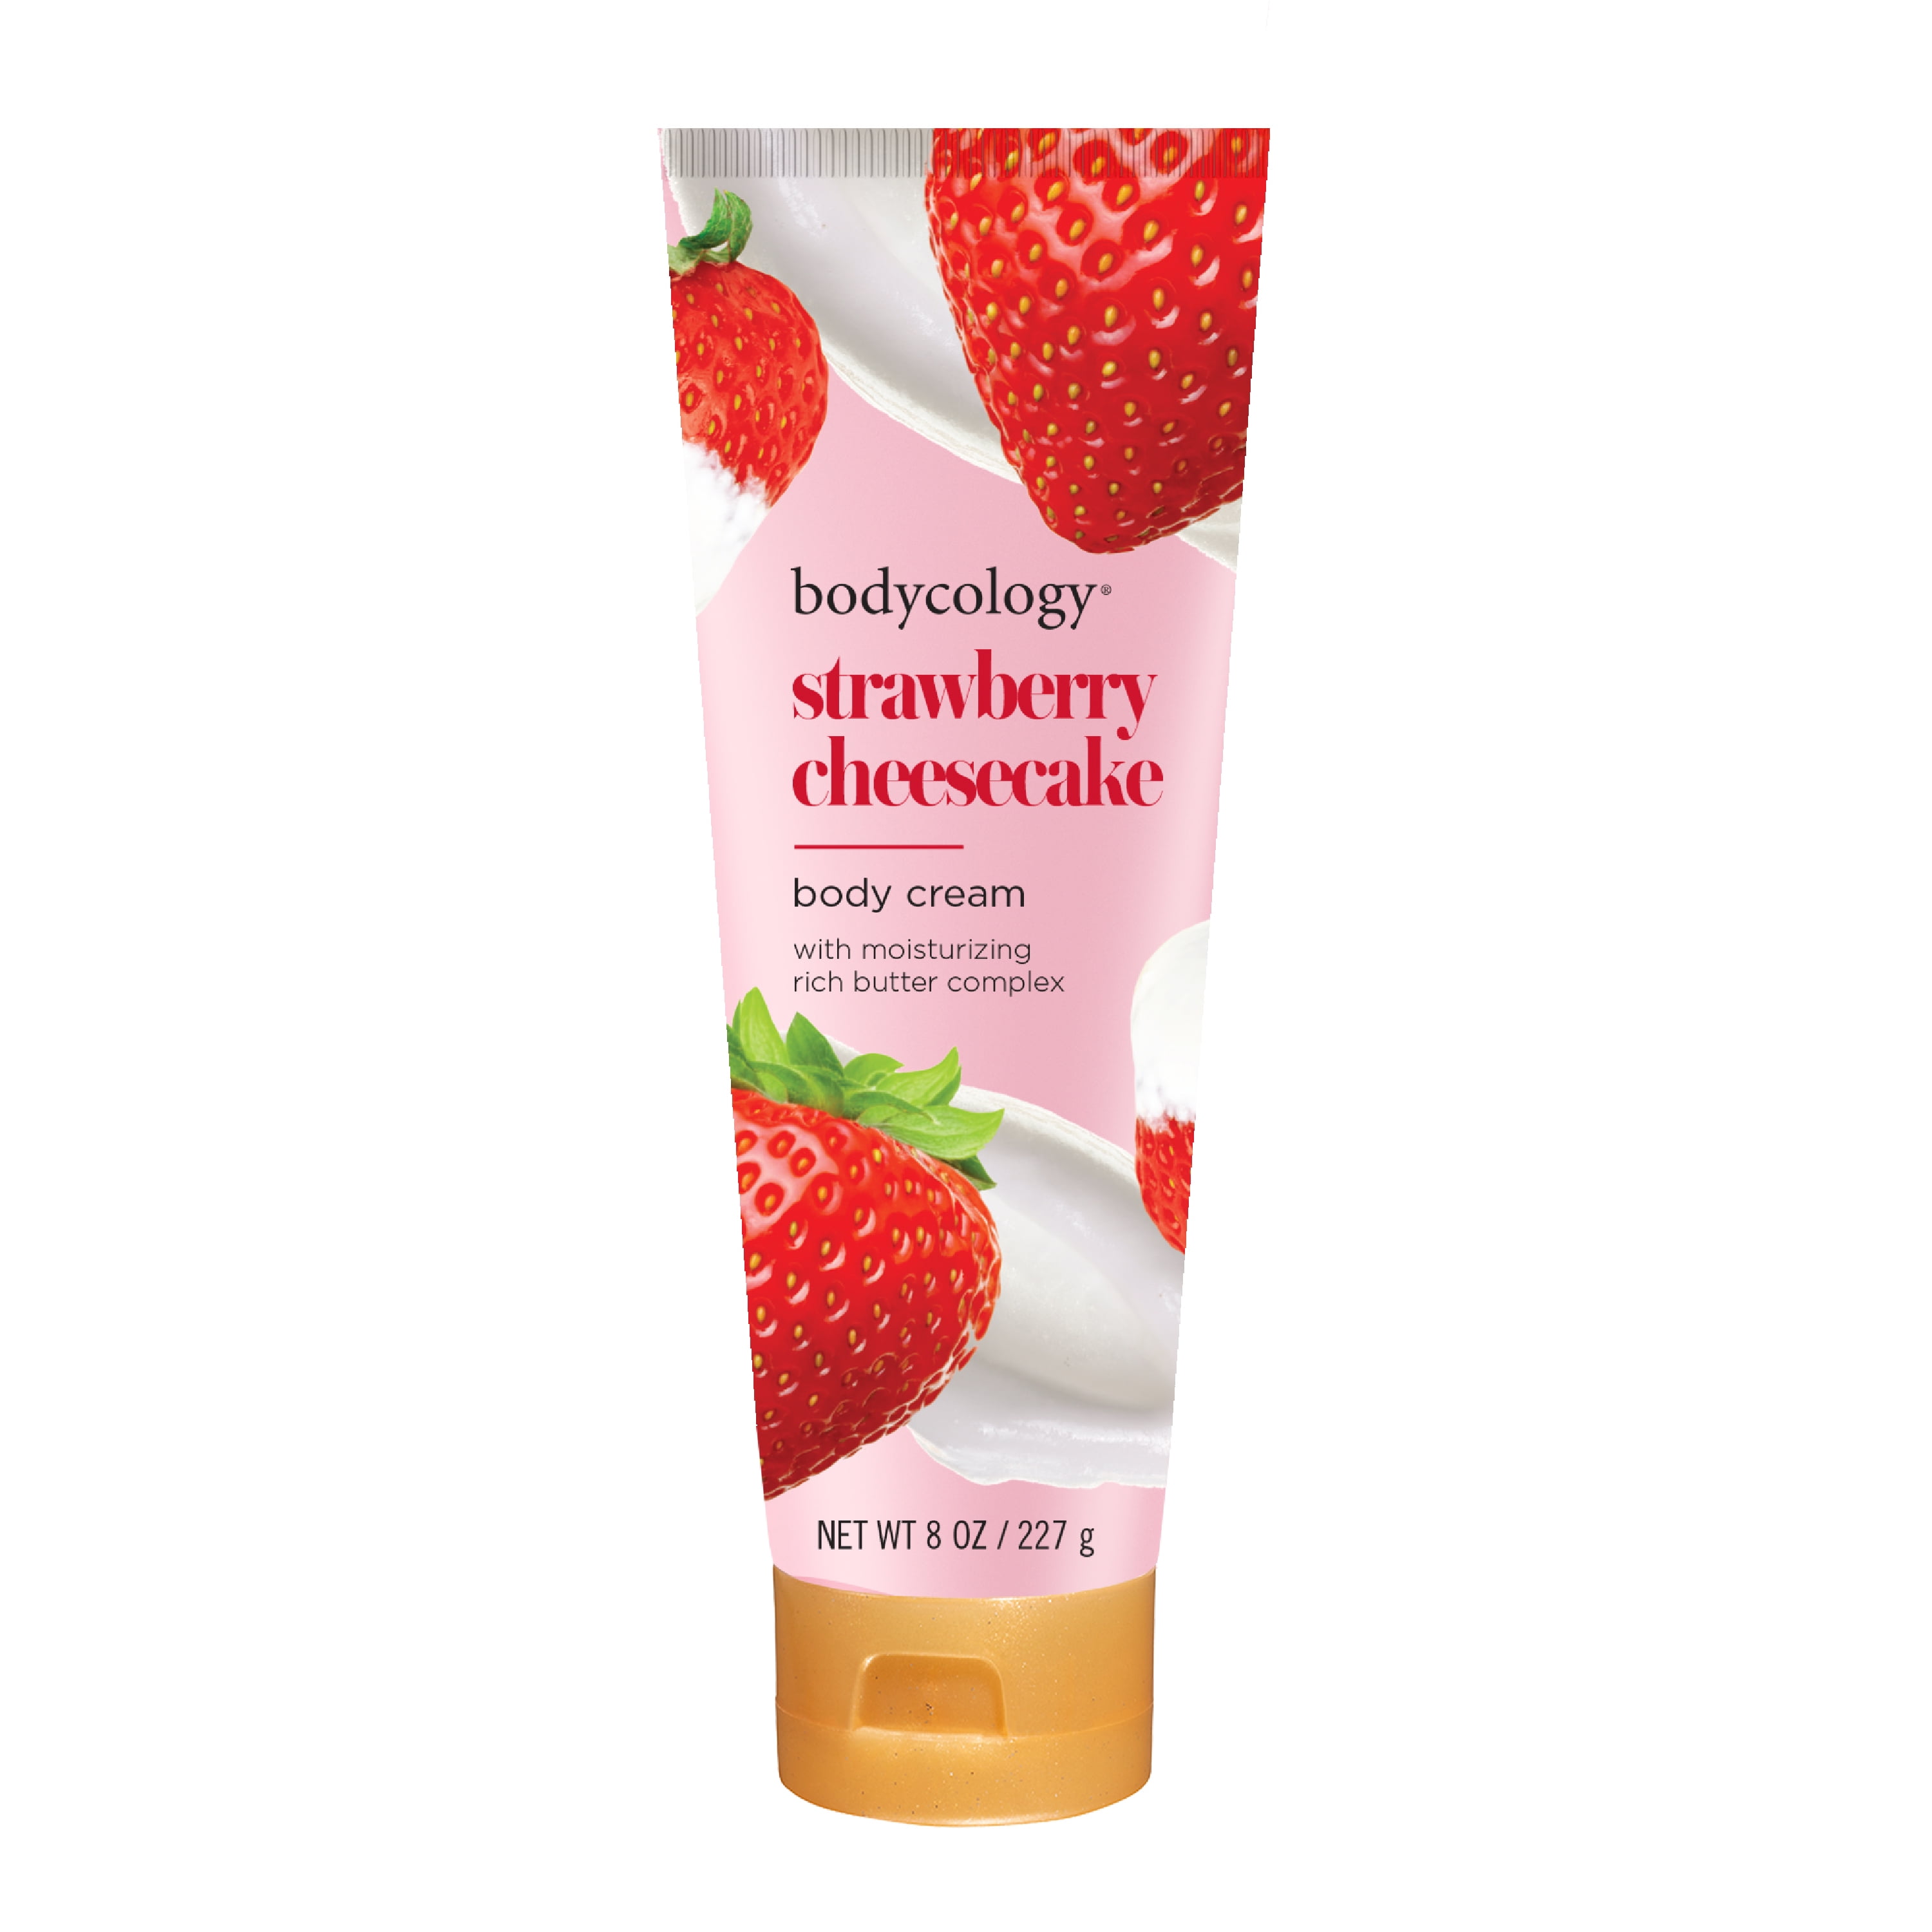 Bodycology Strawberry Cheesecake Body Cream, 8 oz - Walmart.com